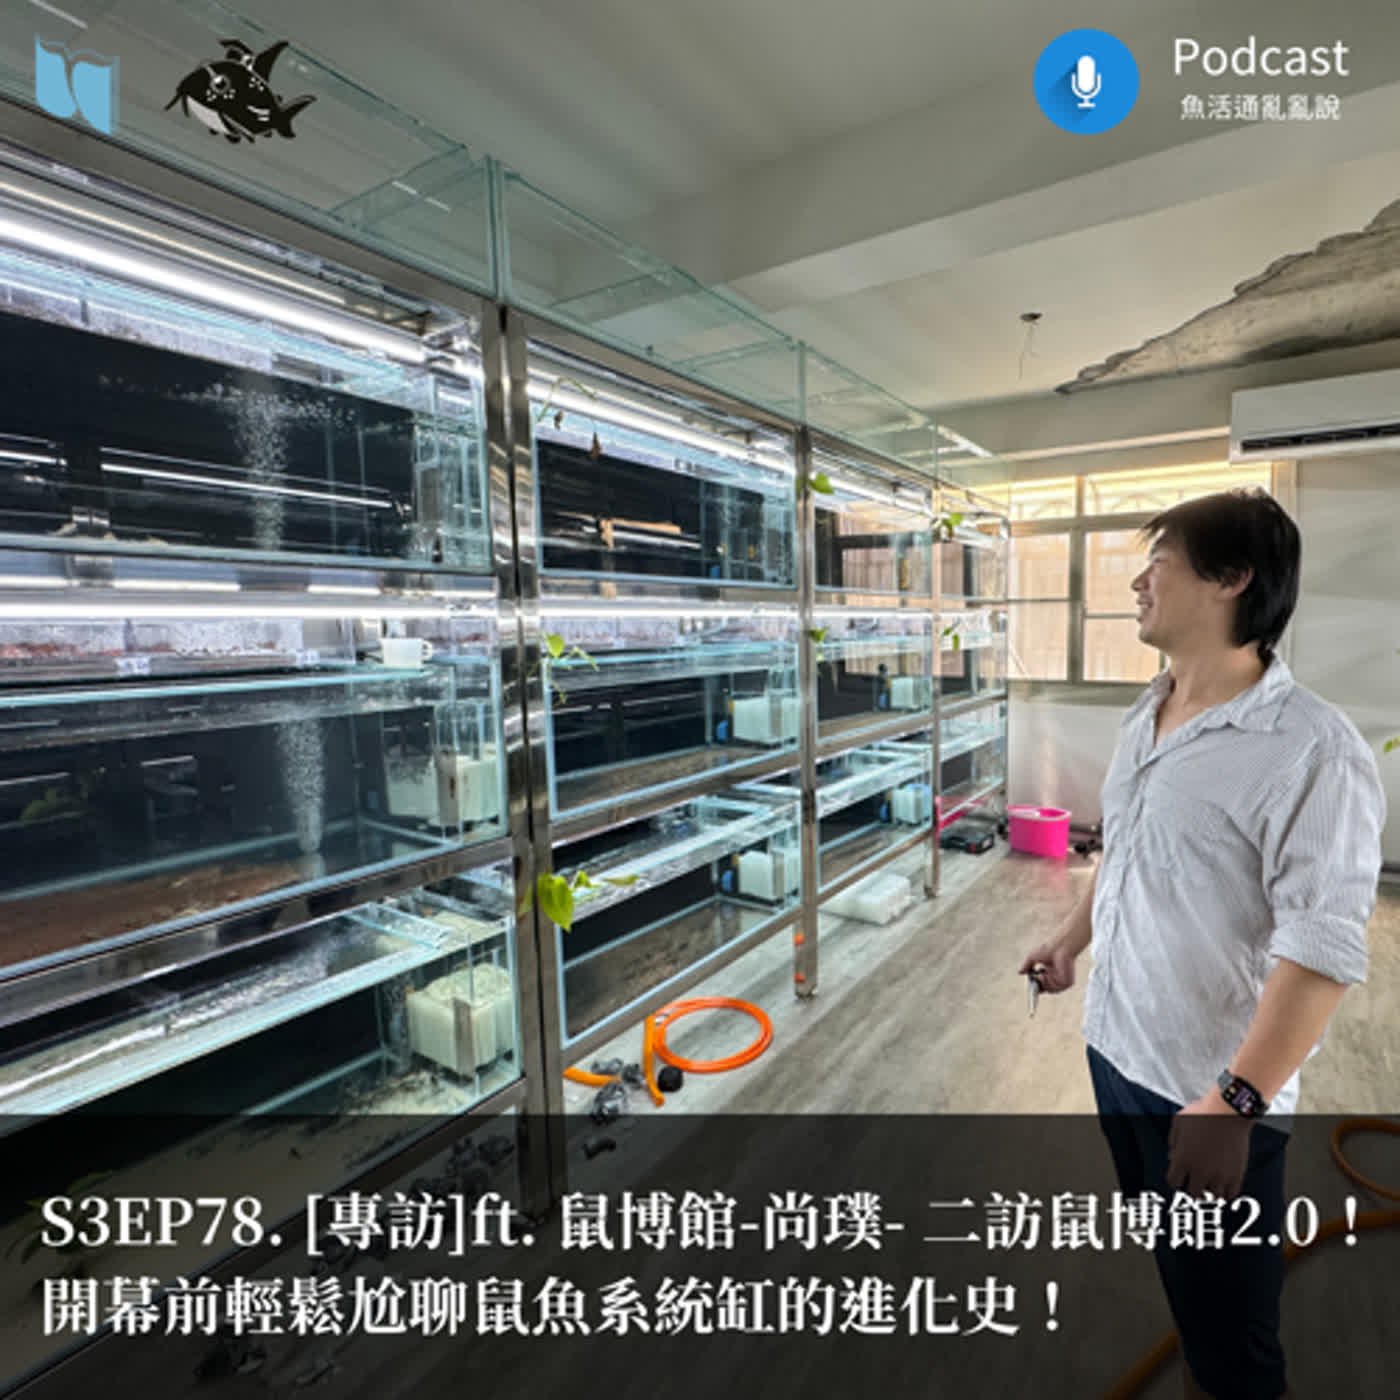 S3EP78. [專訪]ft. 鼠博館-尚璞- 二訪鼠博館2.0！開幕前輕鬆尬聊鼠魚系統缸的進化史！